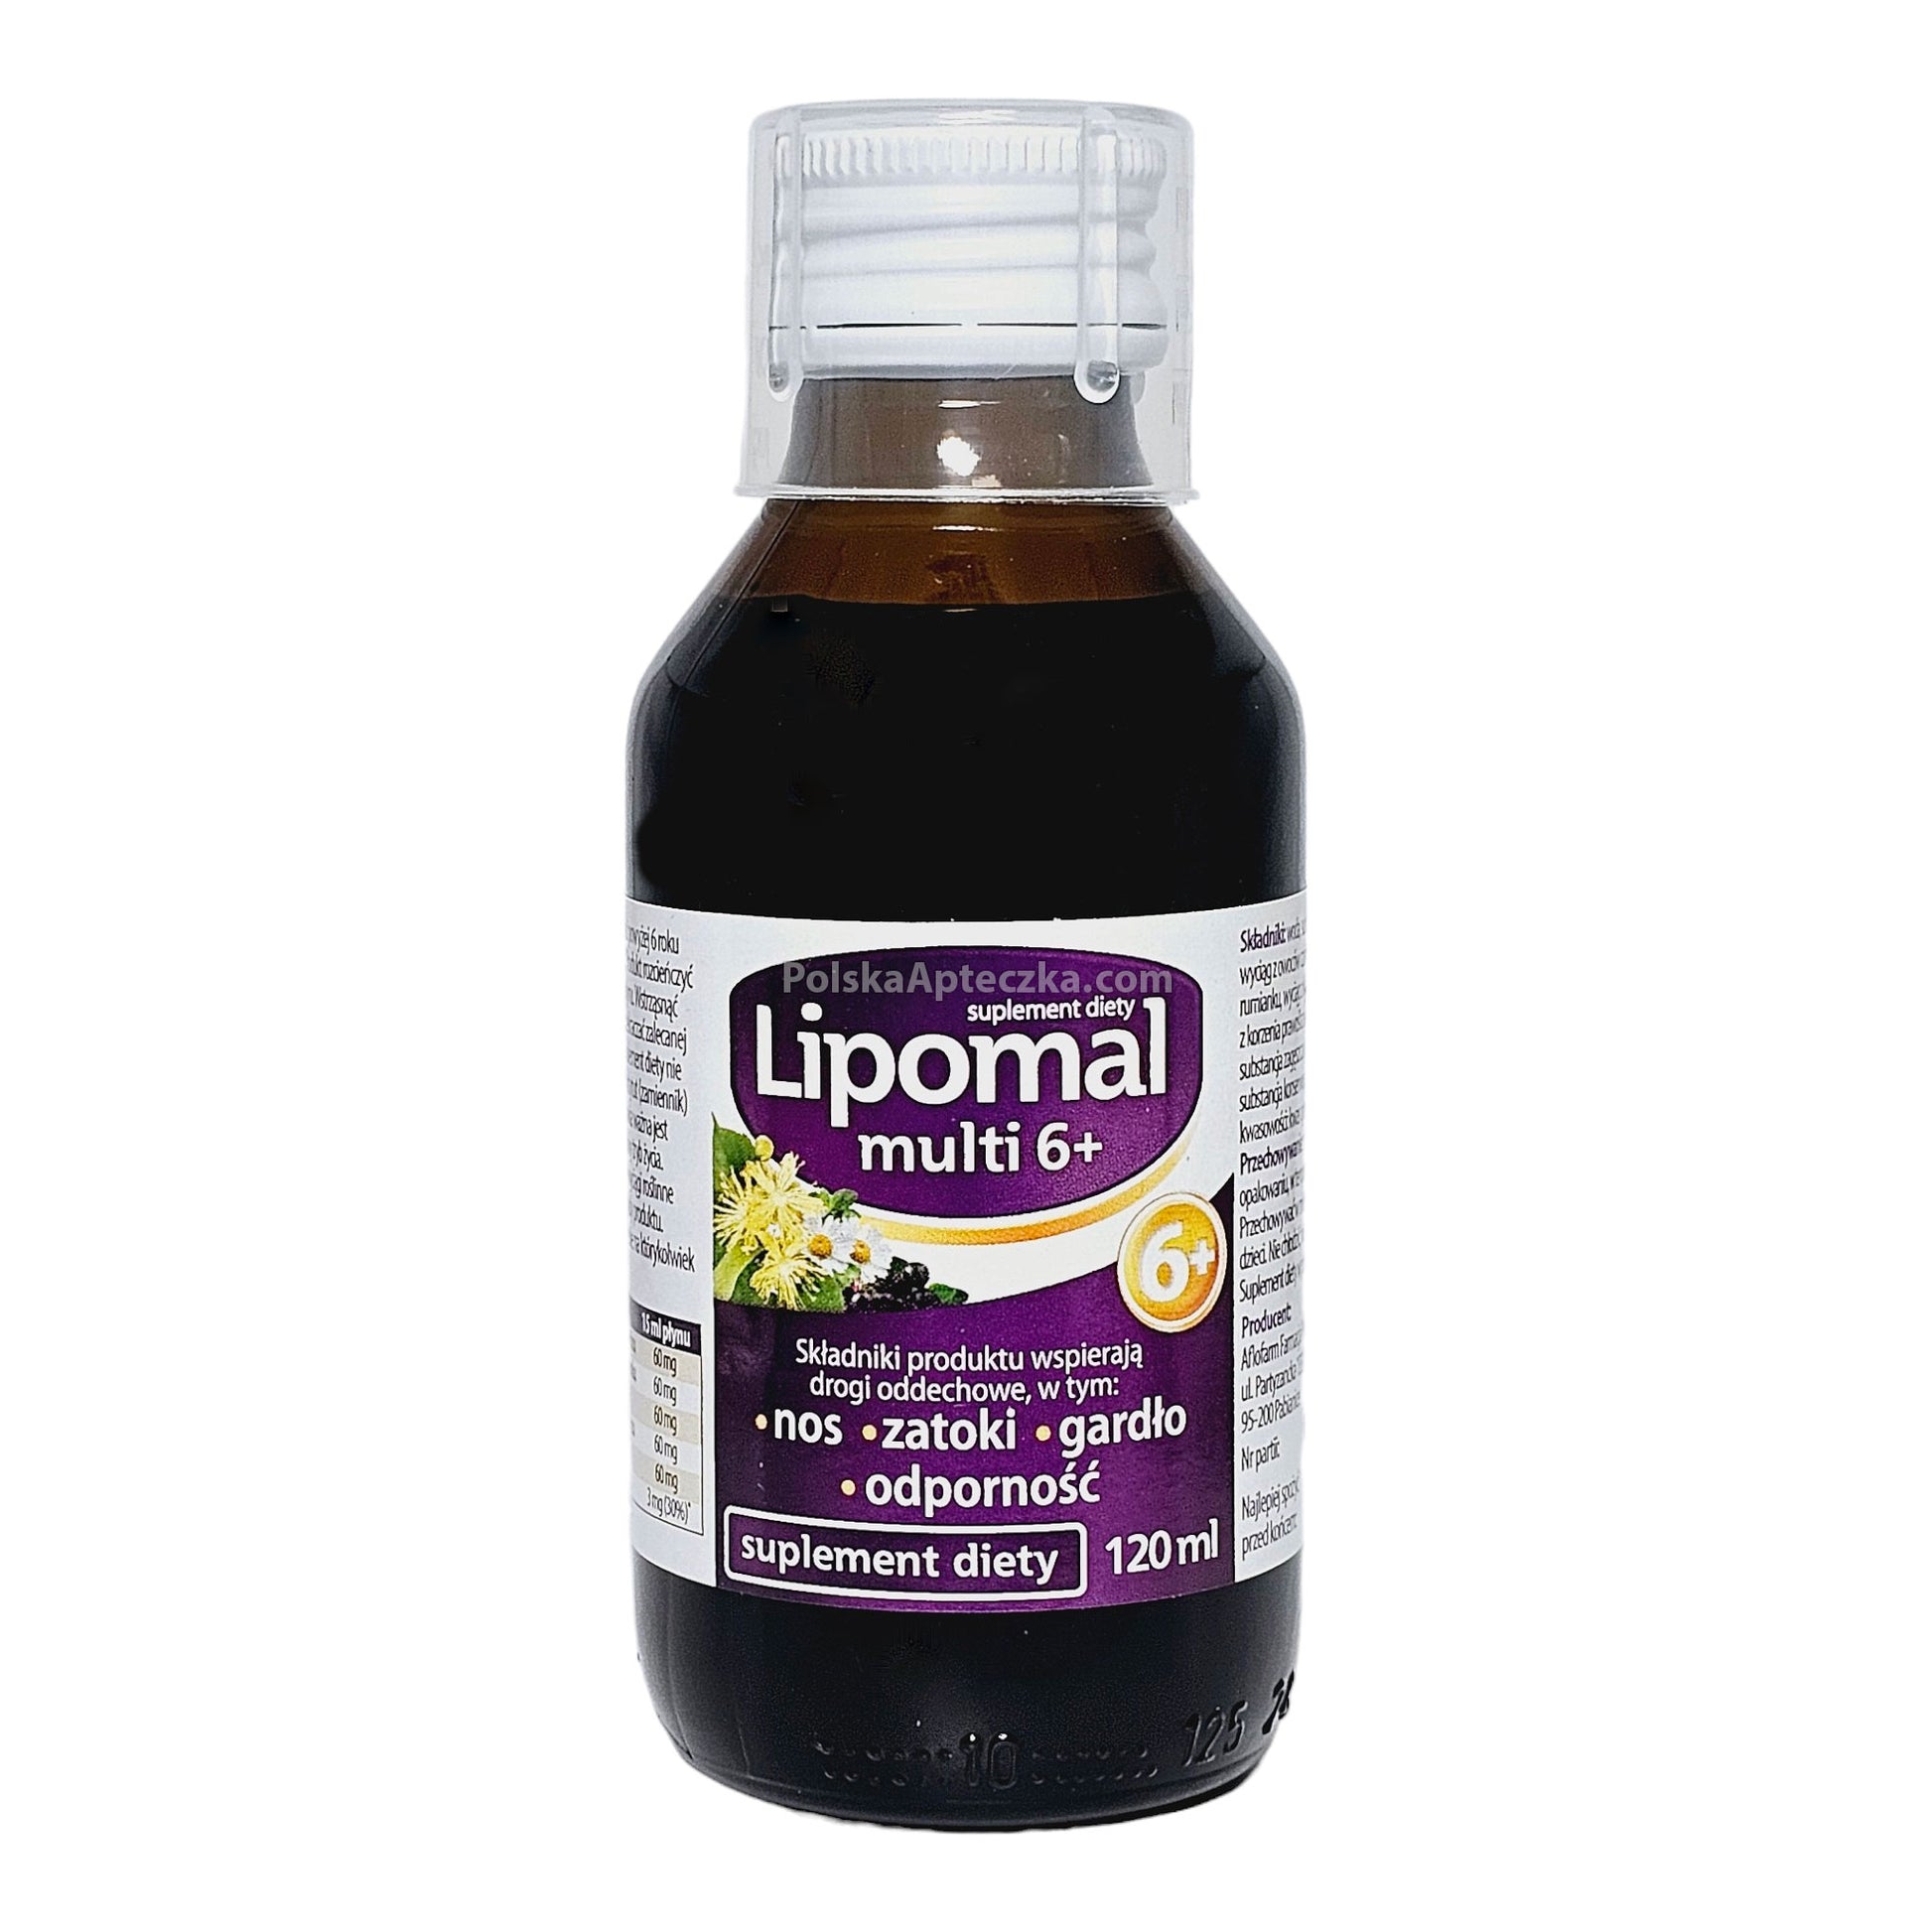 Lipomal multi syrup